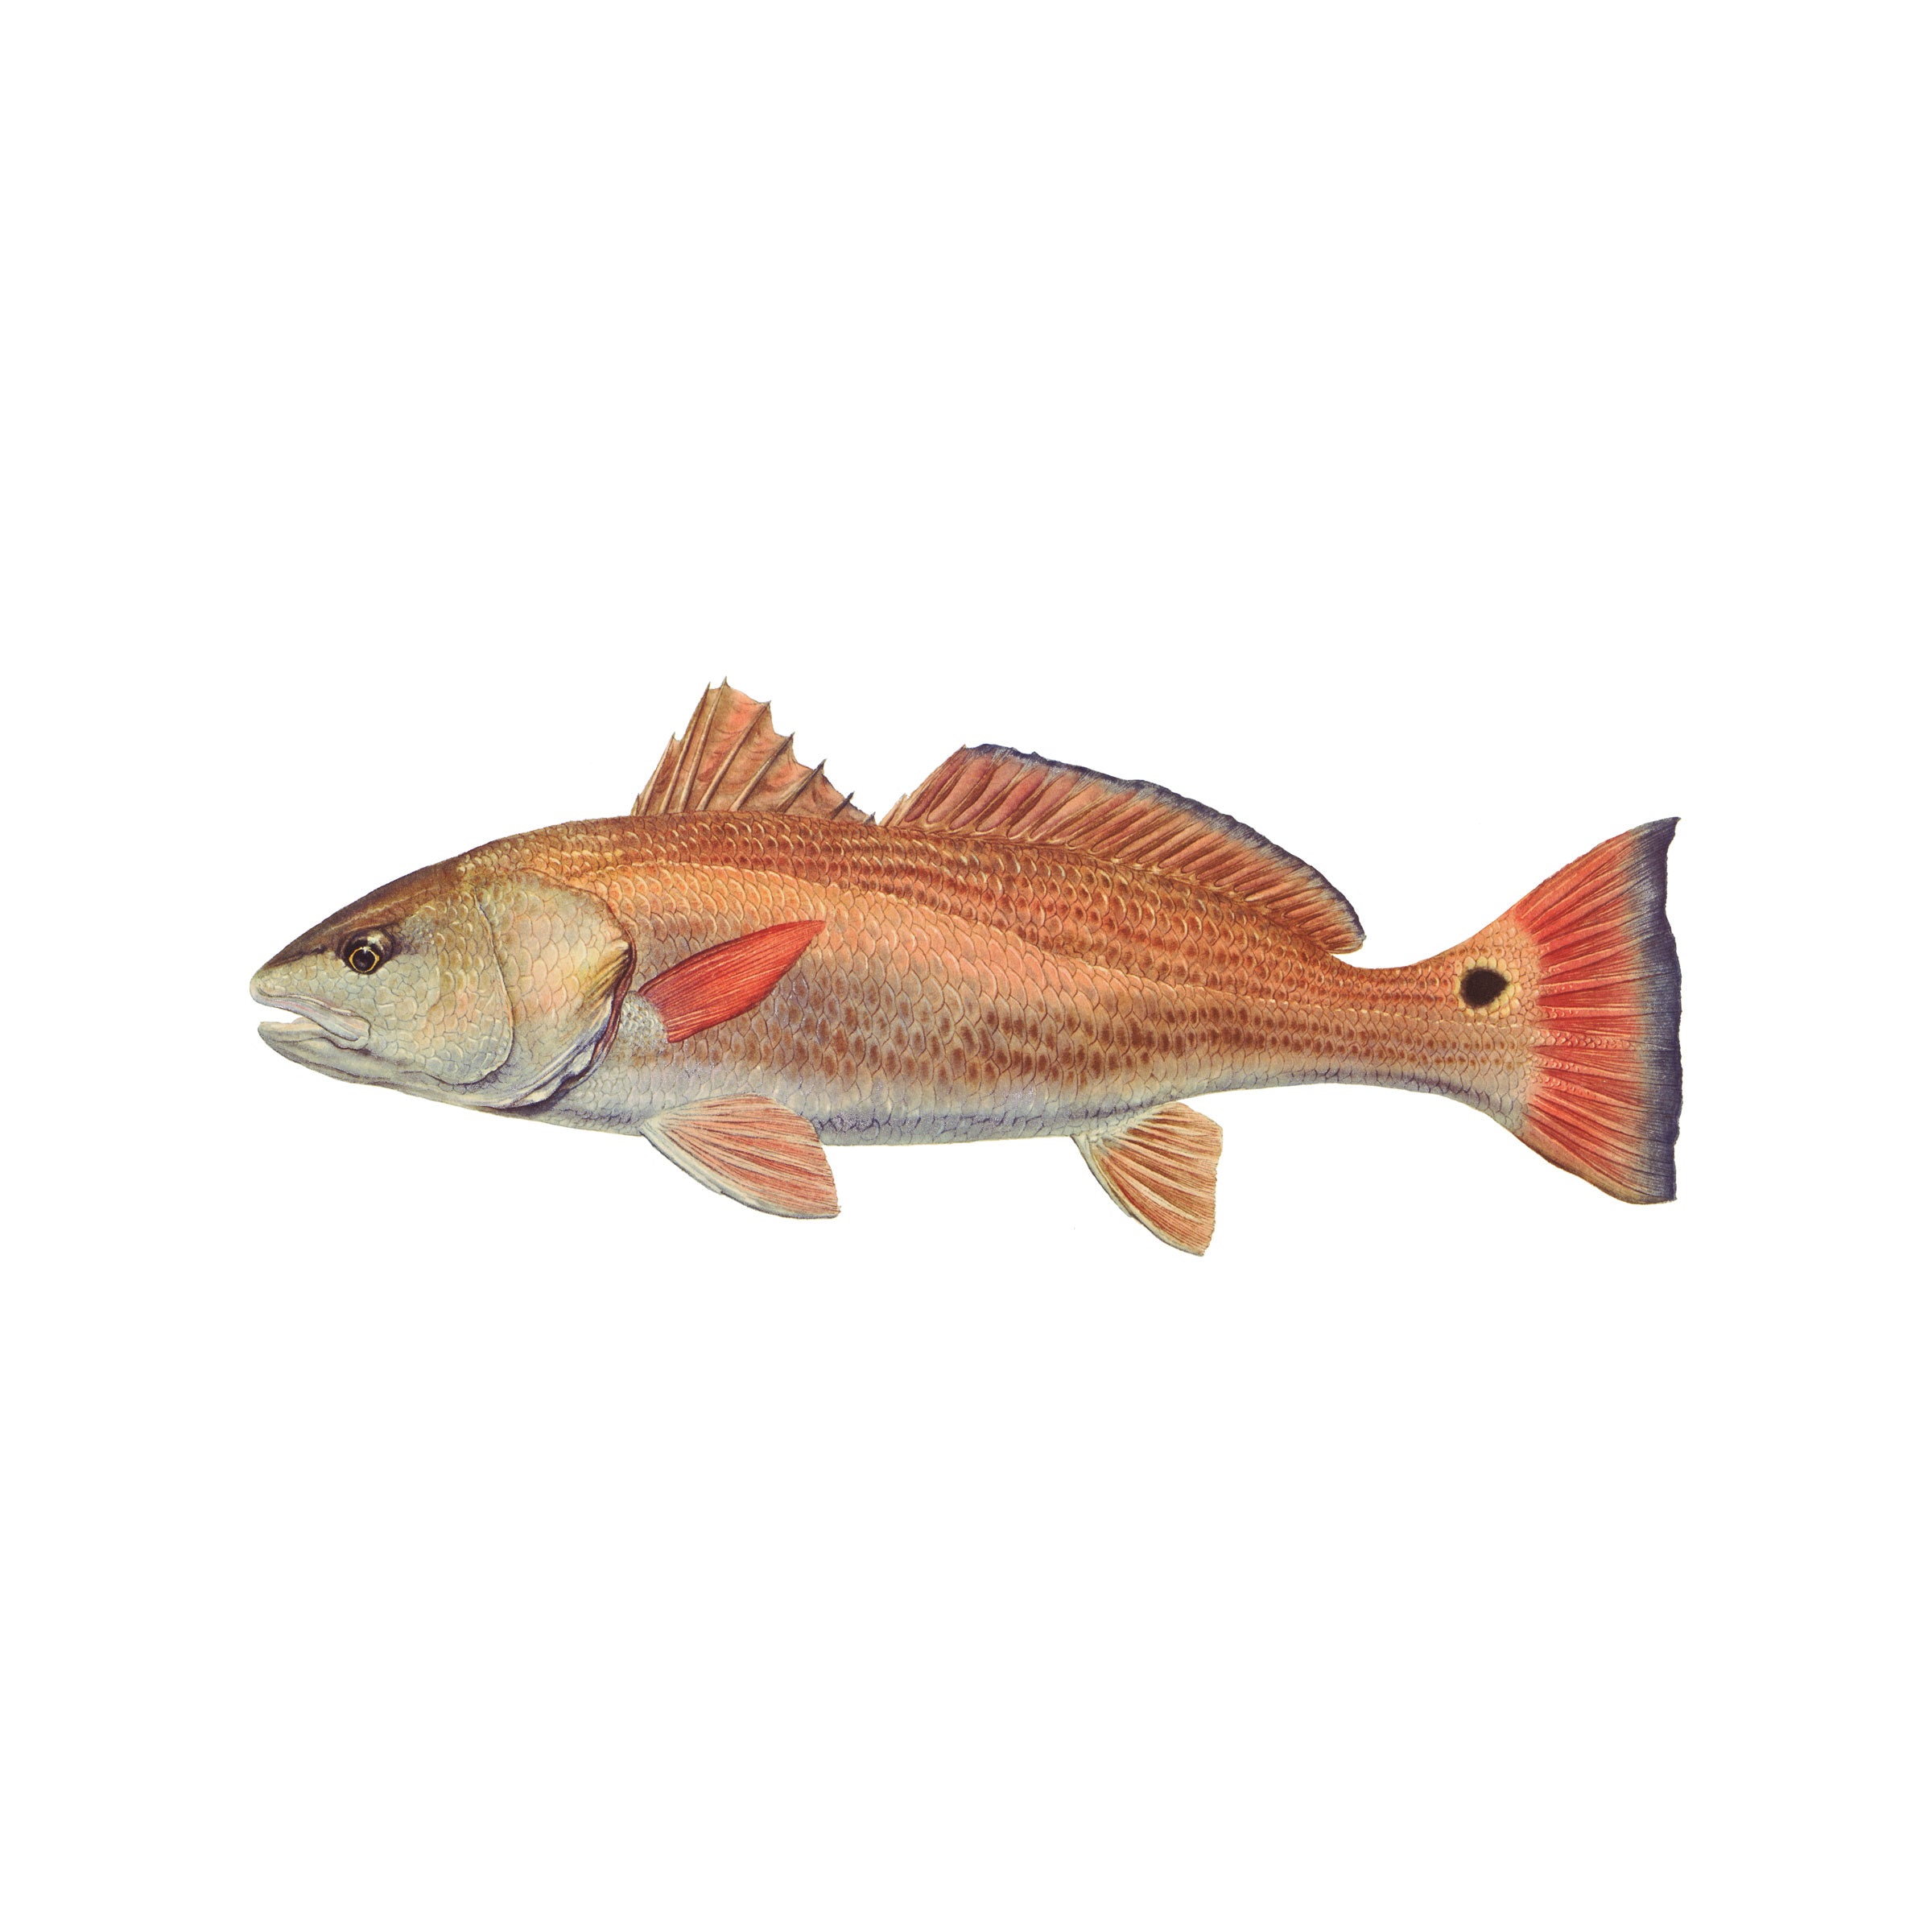 #species_redfish